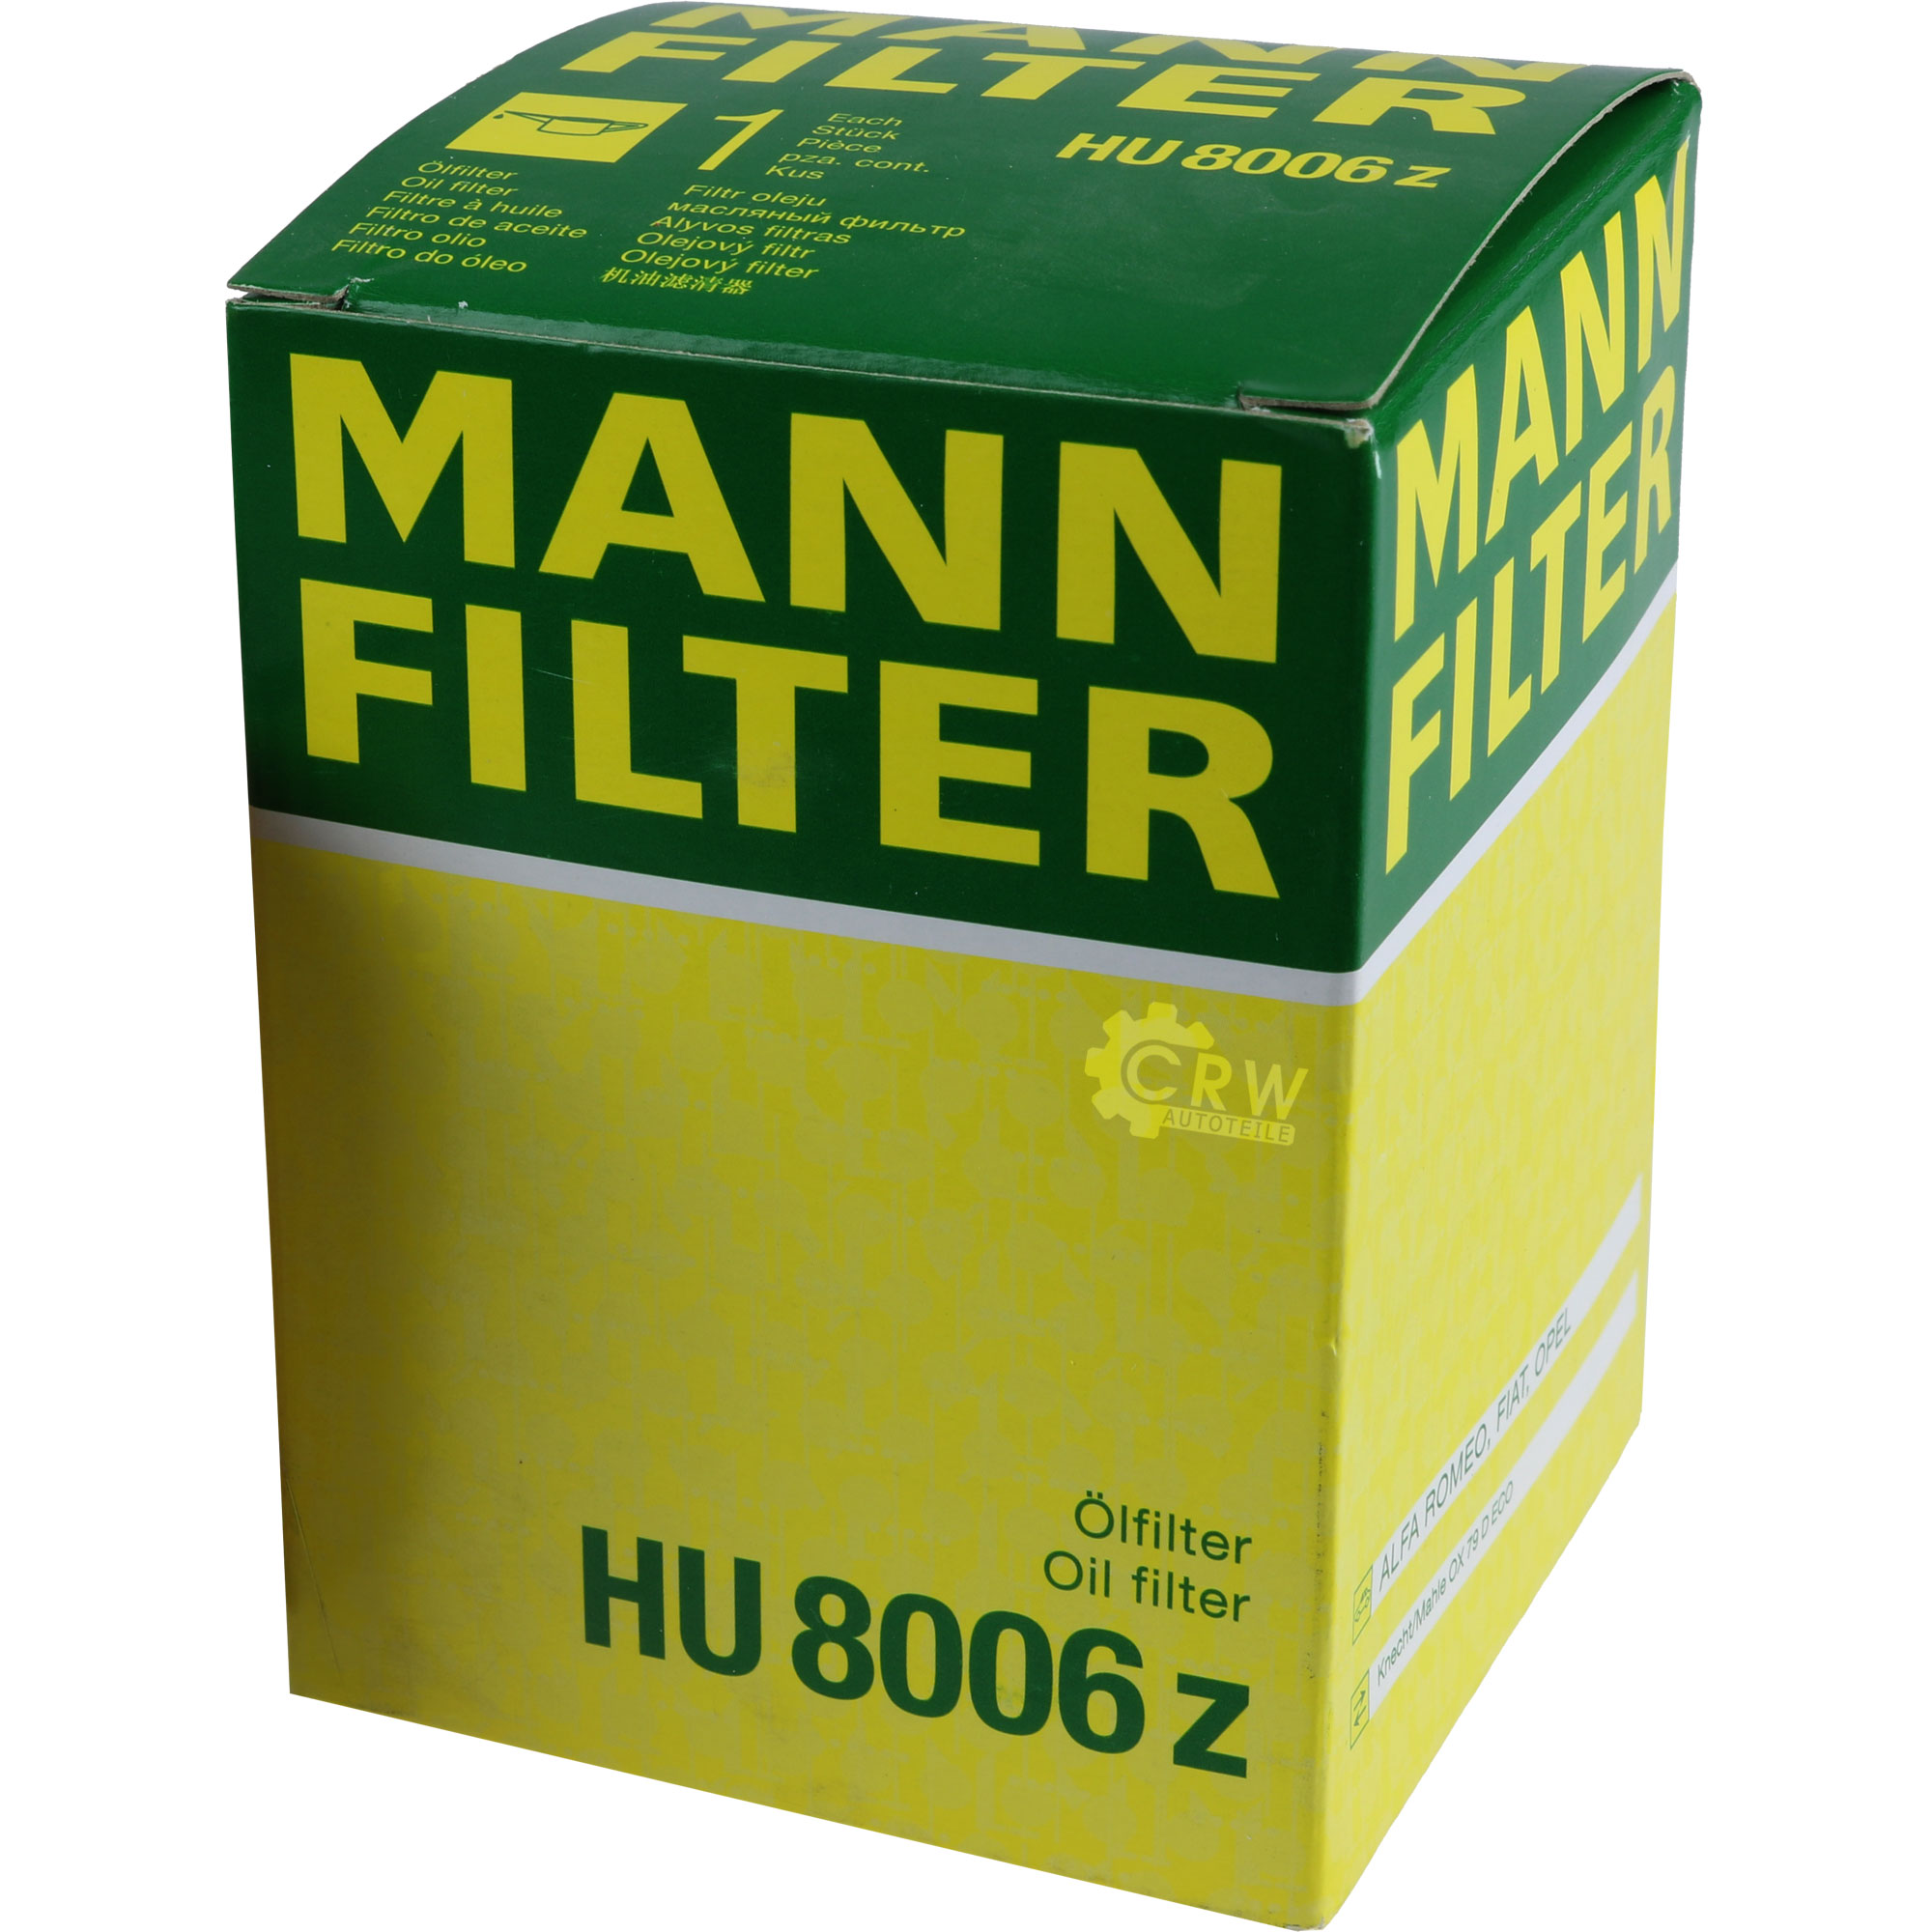 MANN-FILTER Ölfilter HU 8006 z Oil Filter